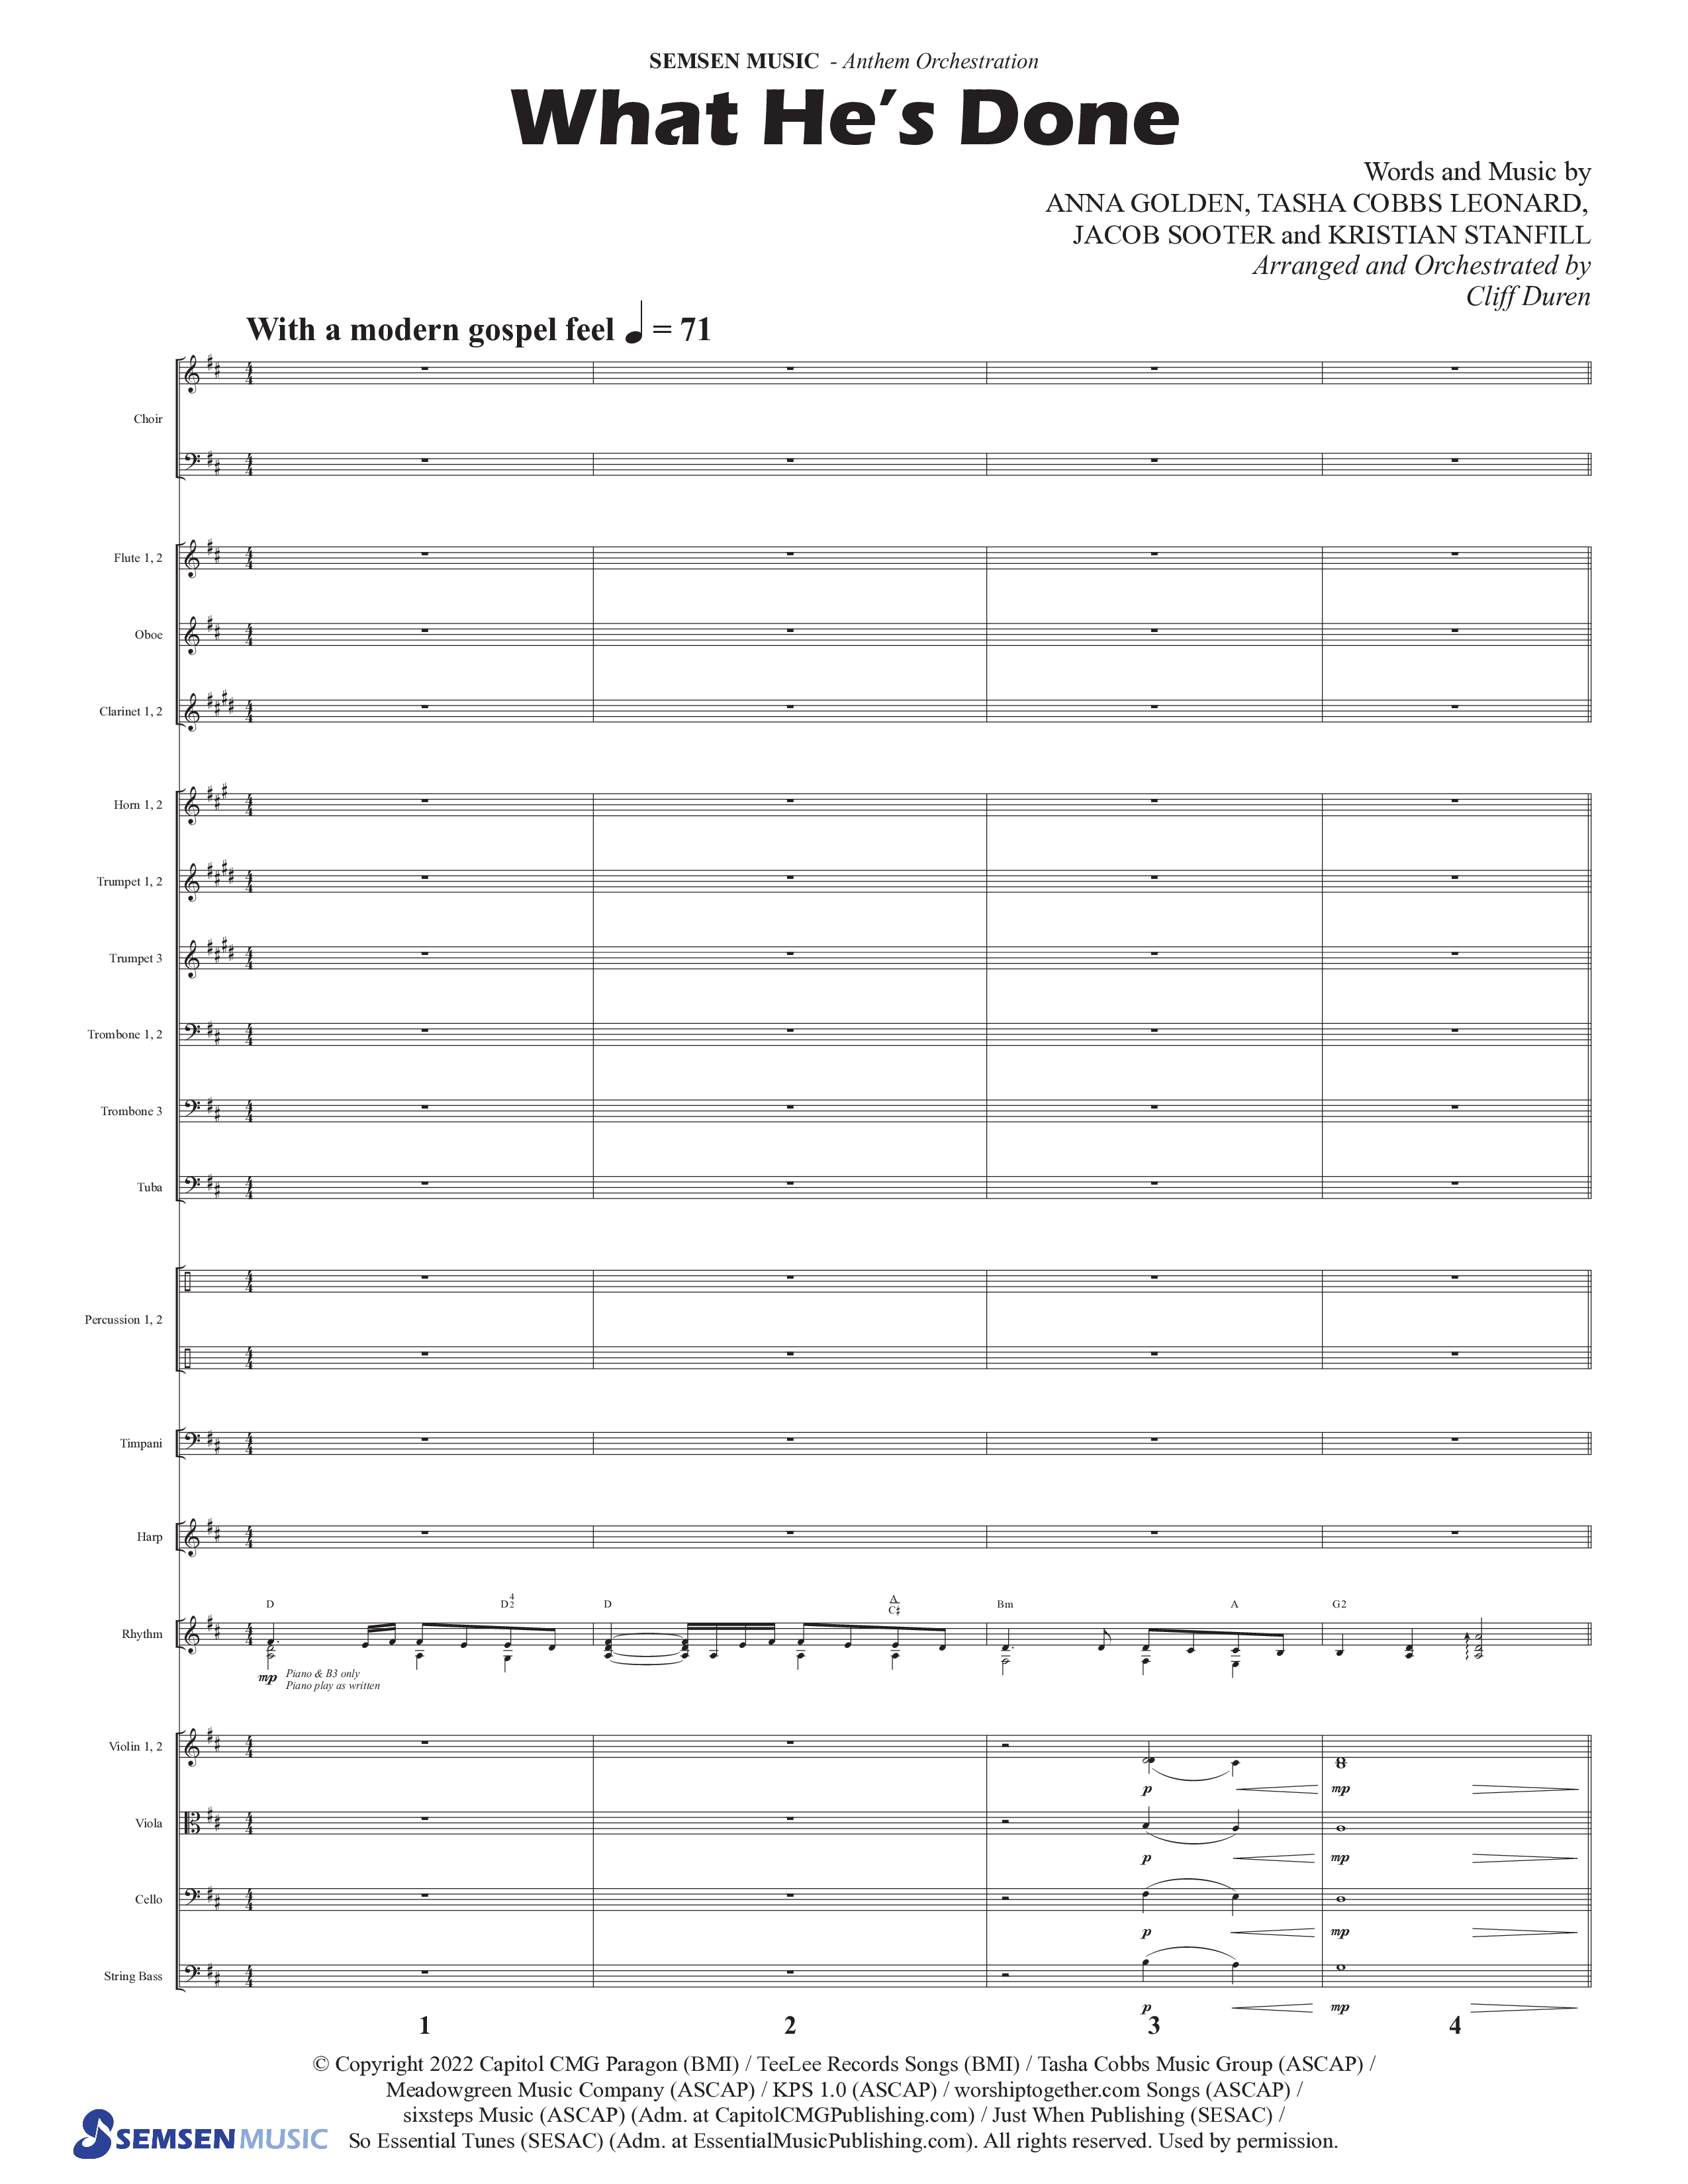 What He's Done (Choral Anthem SATB) Orchestration (Semsen Music / Arr. Cliff Duren)